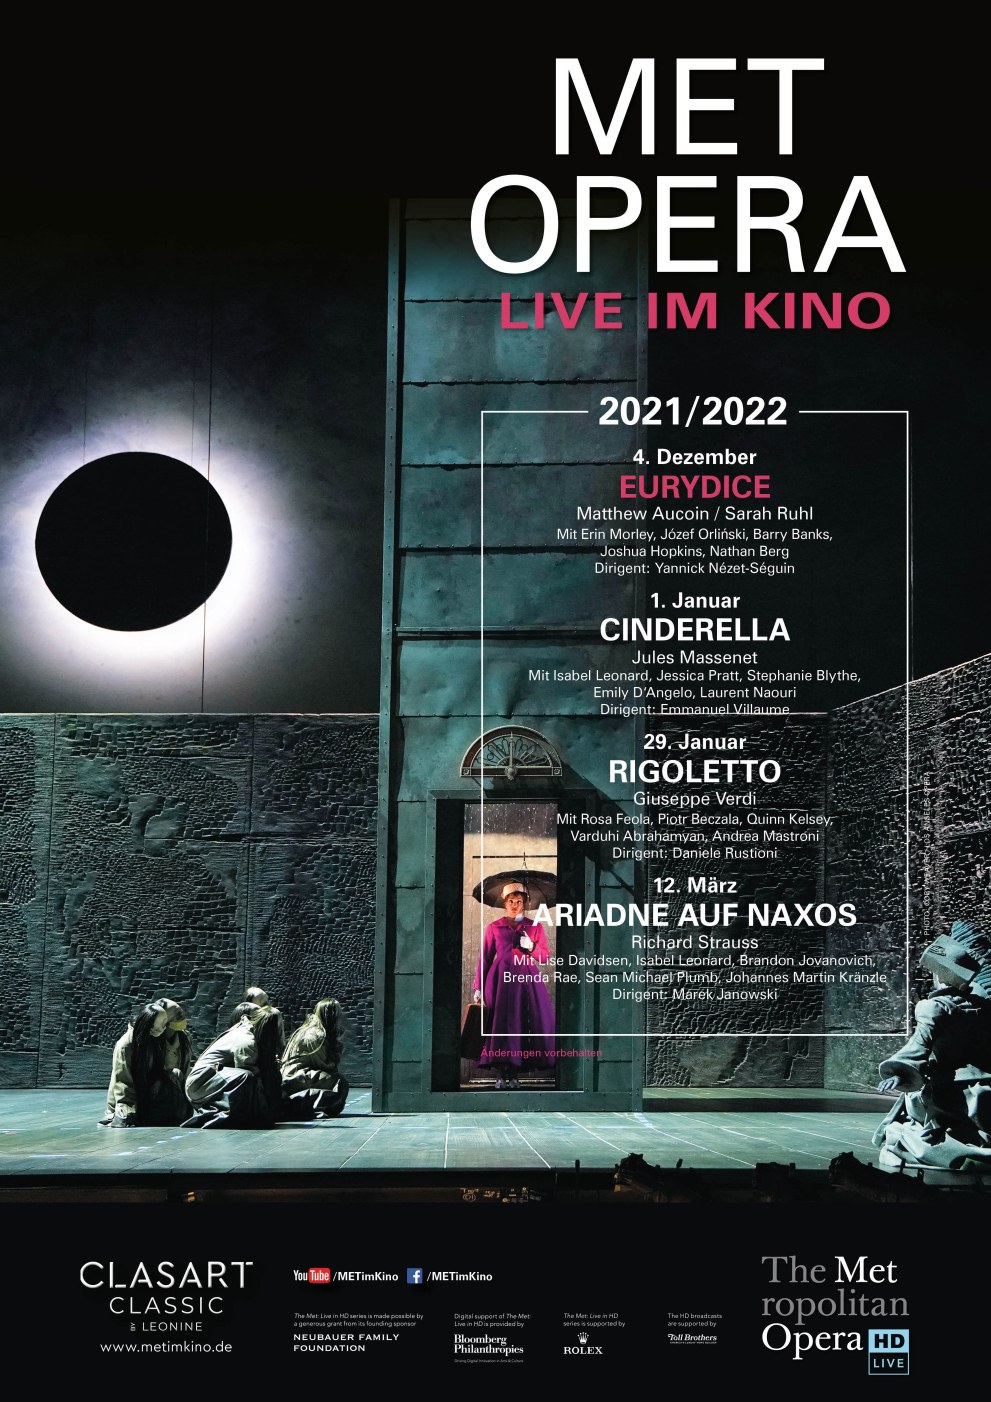 Met Opera 20/20 Matthew Aucoin EURYDICE   Cinestar